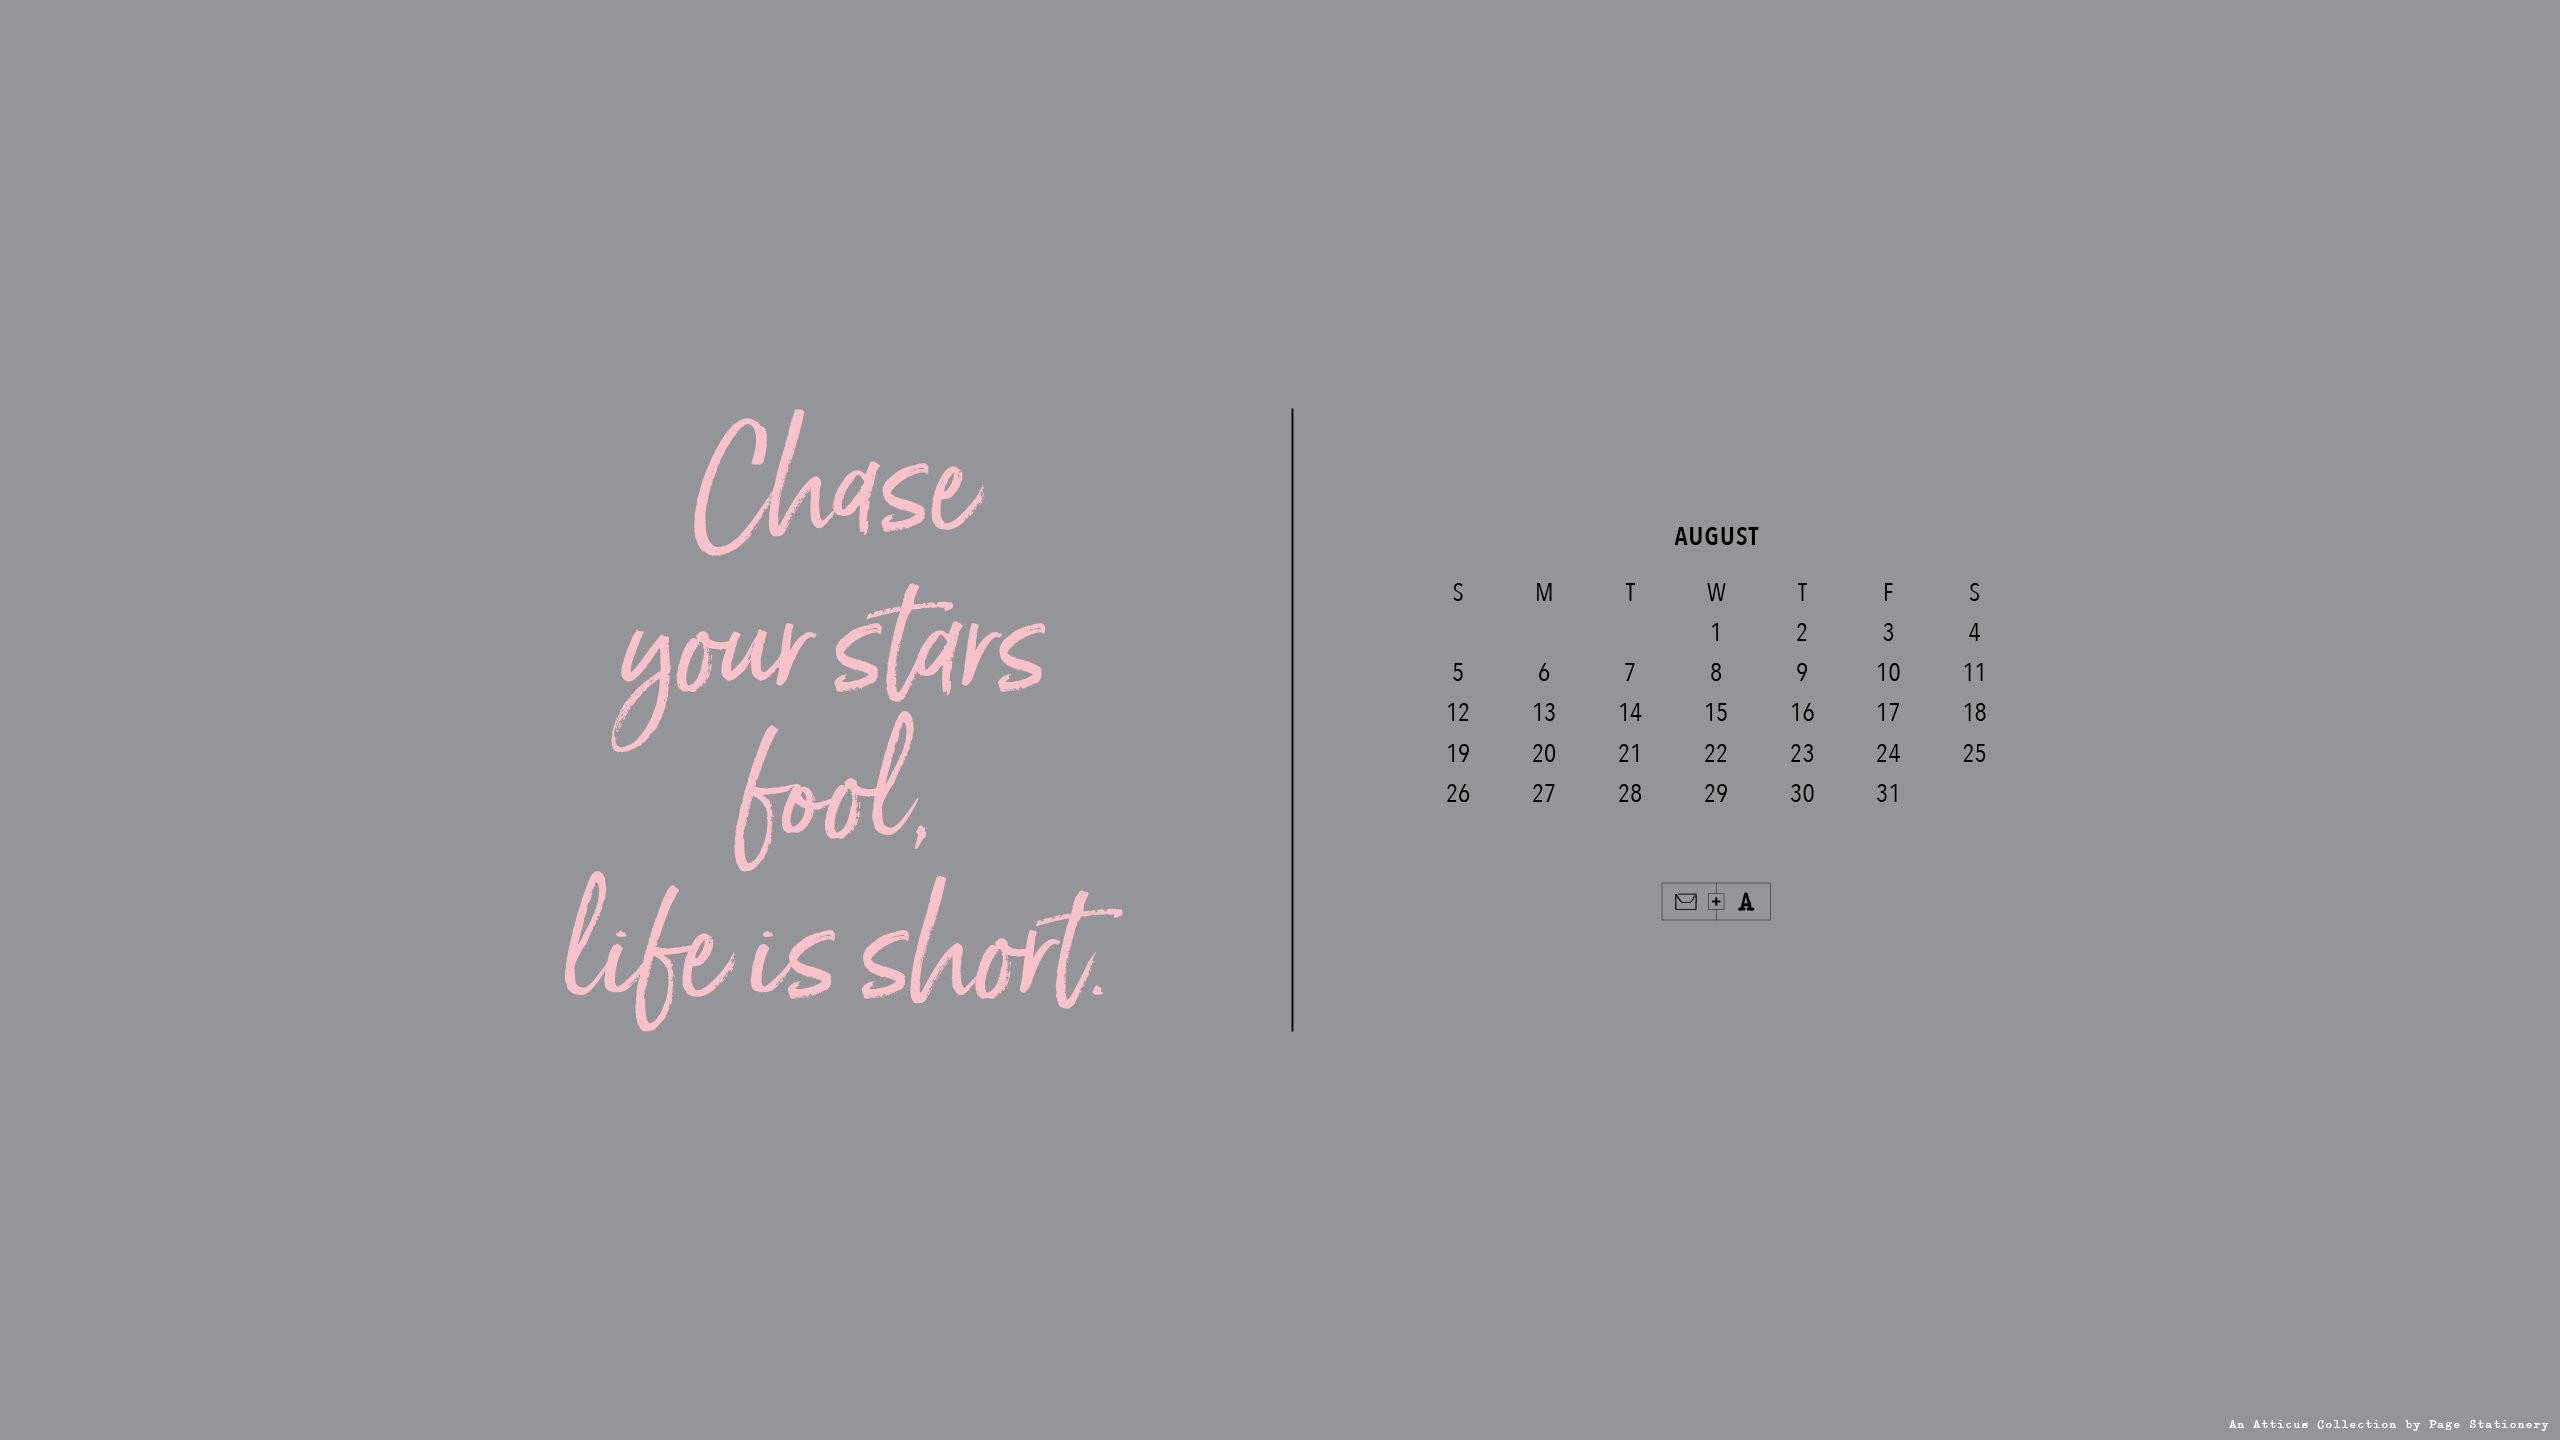 2560x1440 Atticus Desktop Wallpaper with poem and August 2018 Calendar